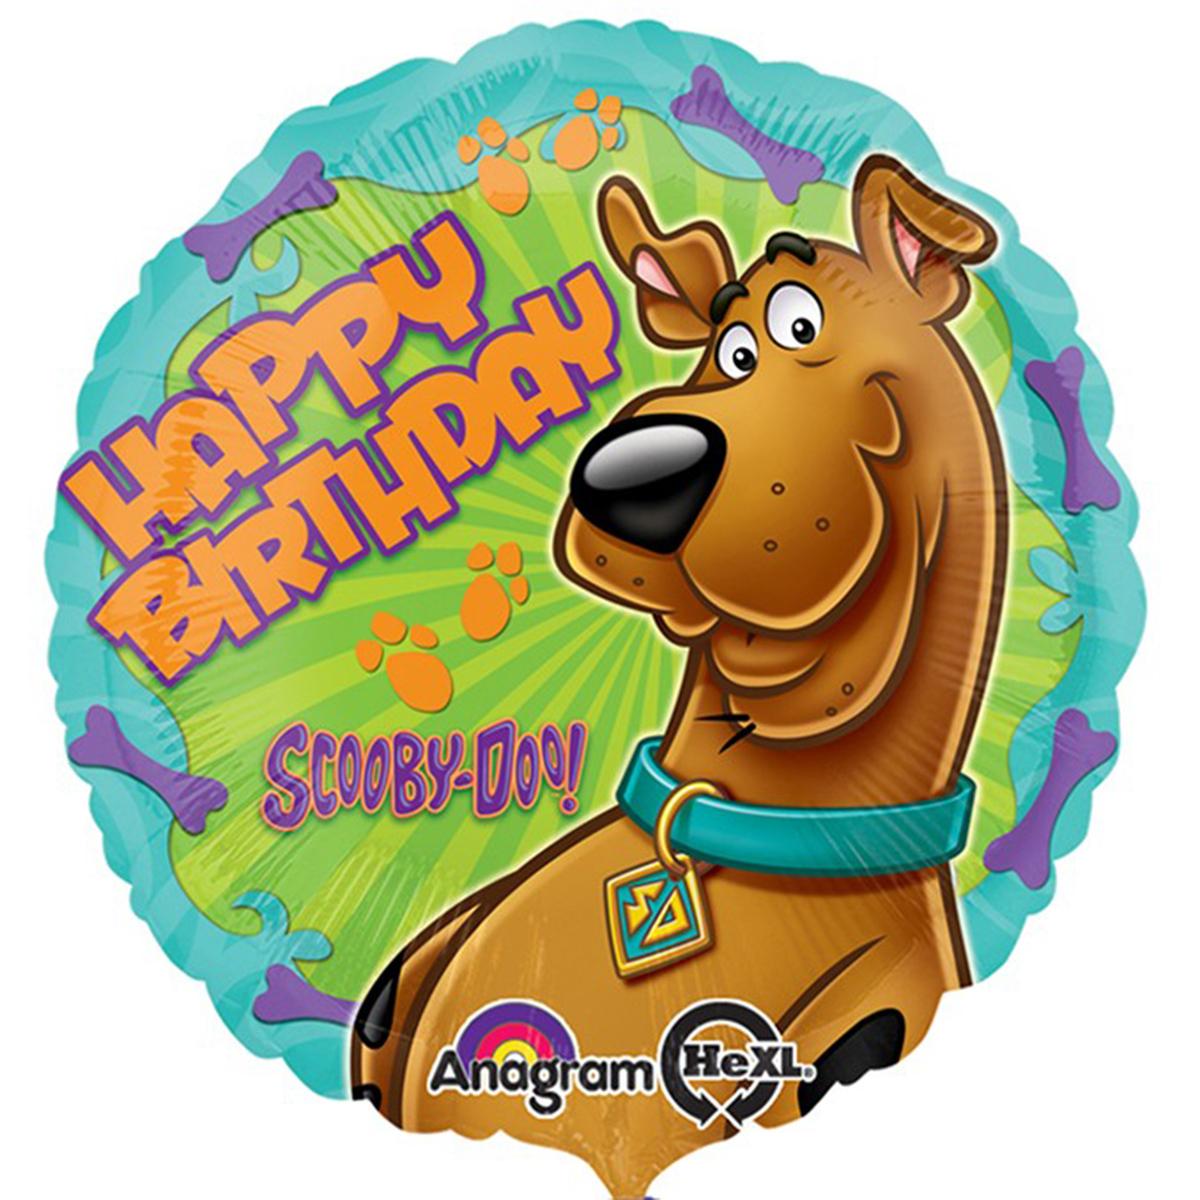 Scooby Doo Foil Balloon 45cm Balloons & Streamers - Party Centre